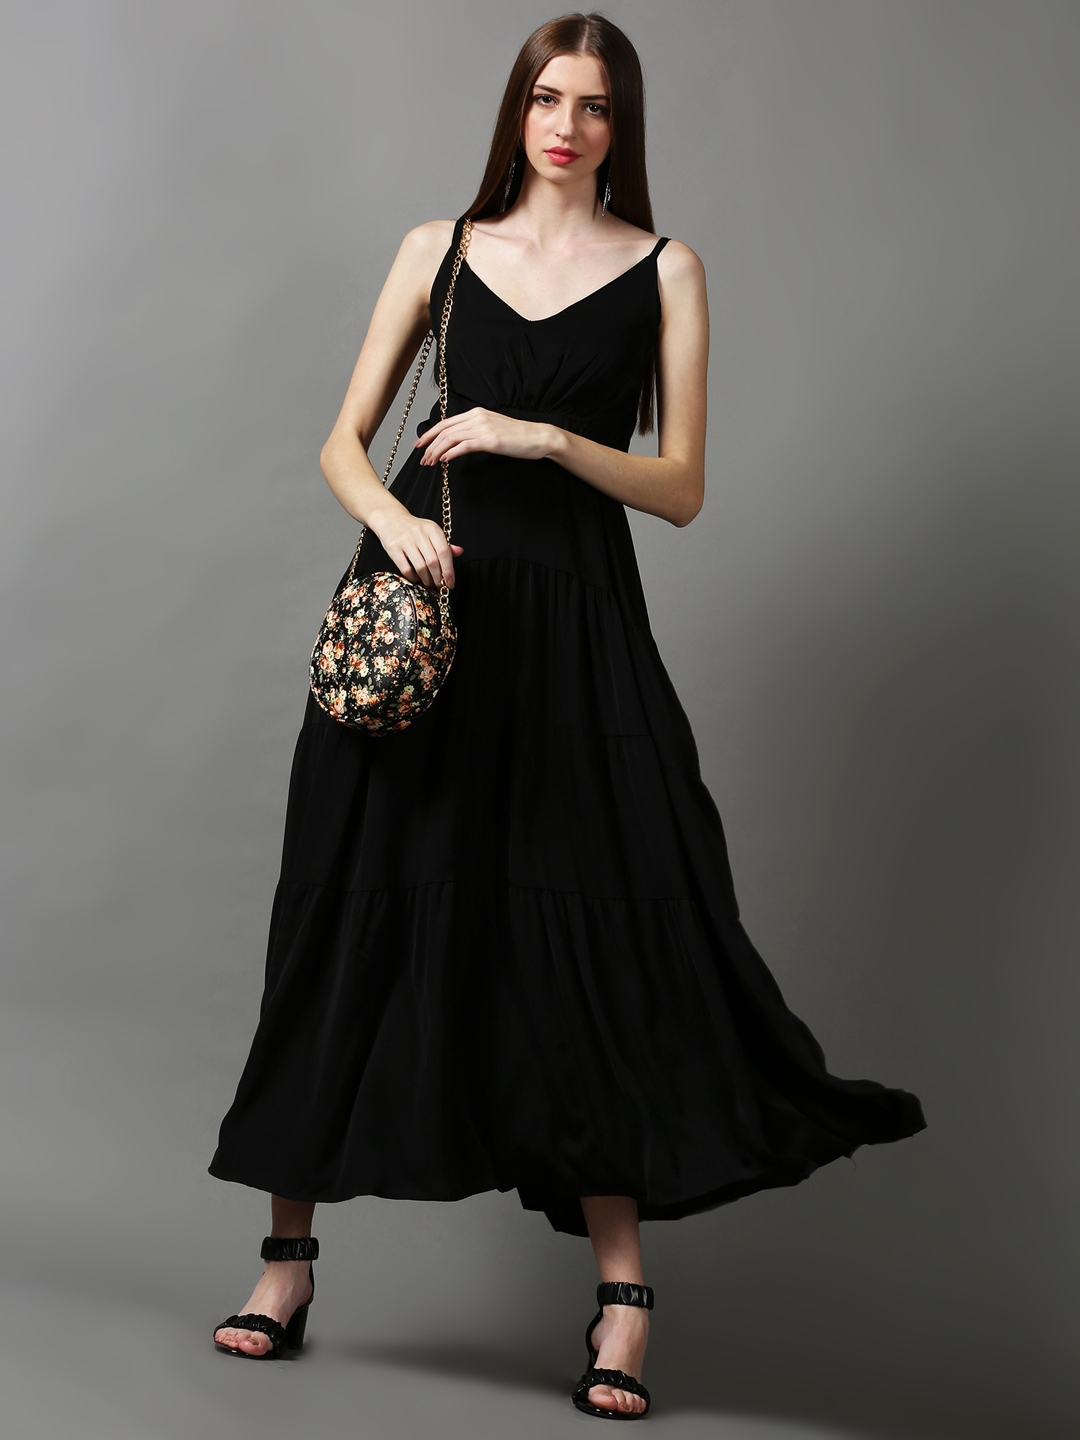 SHOWOFF Women's V-Neck Solid Black Maxi Dress